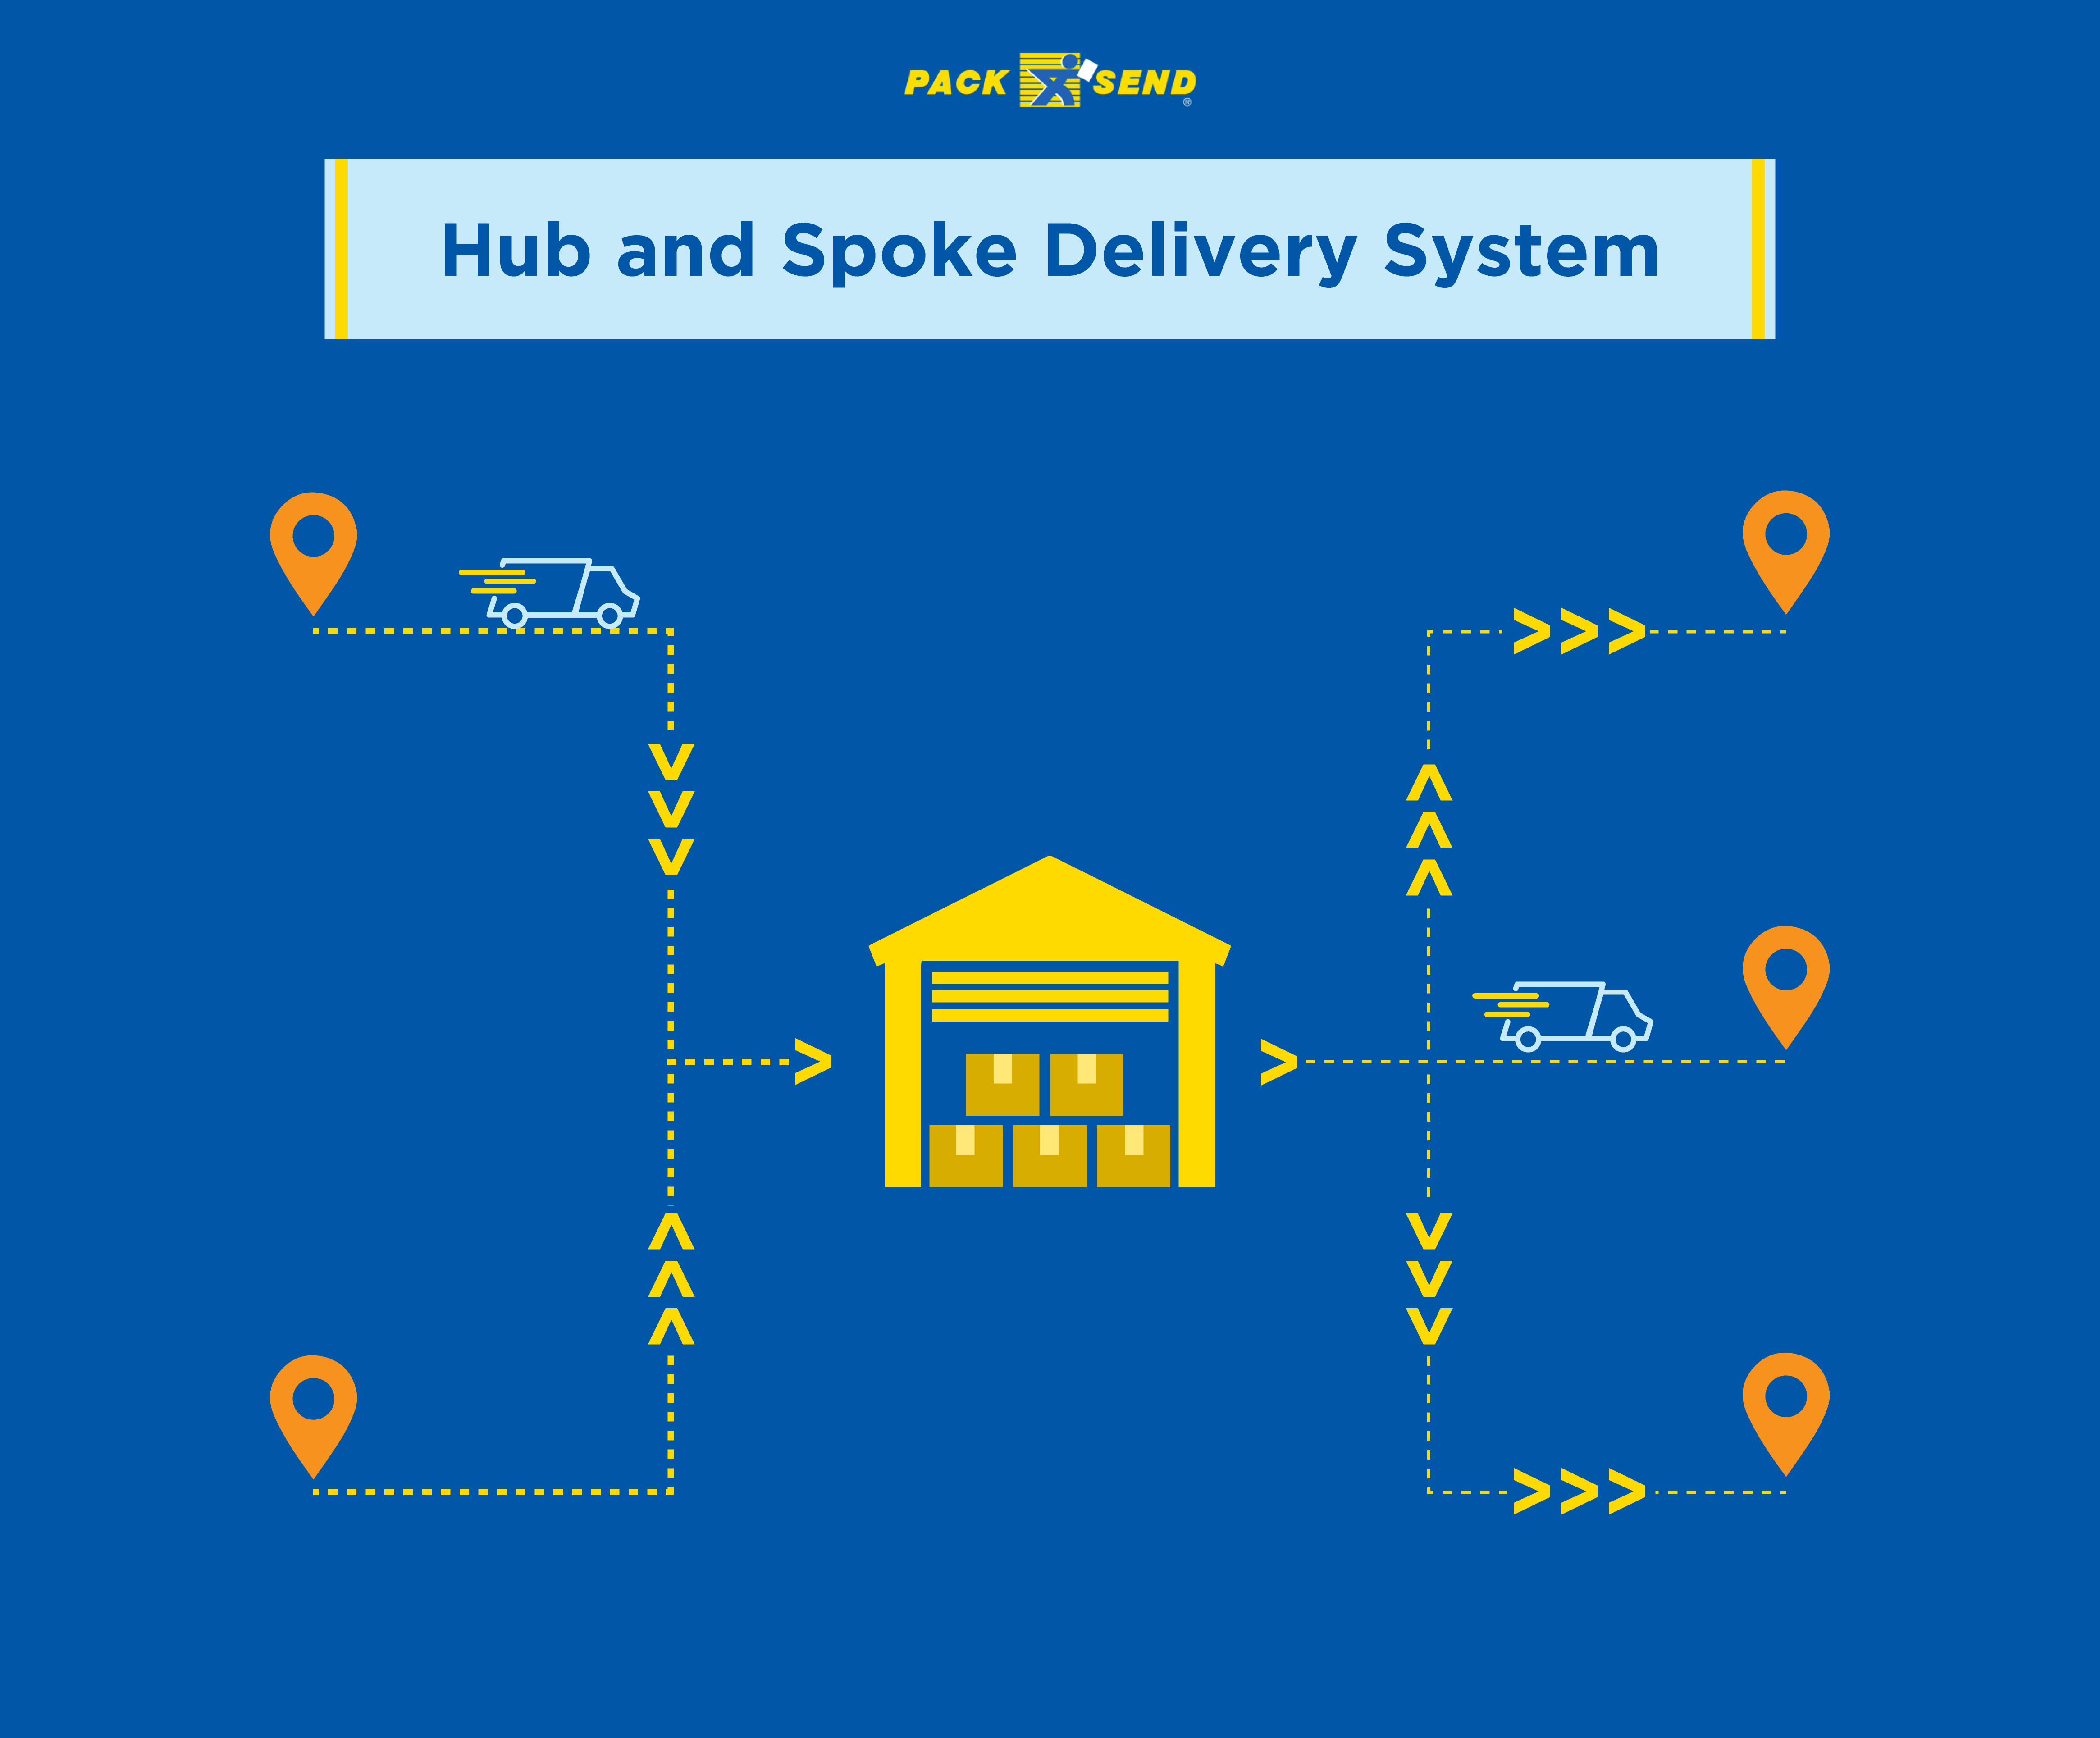 How hub and spoke deliver system works